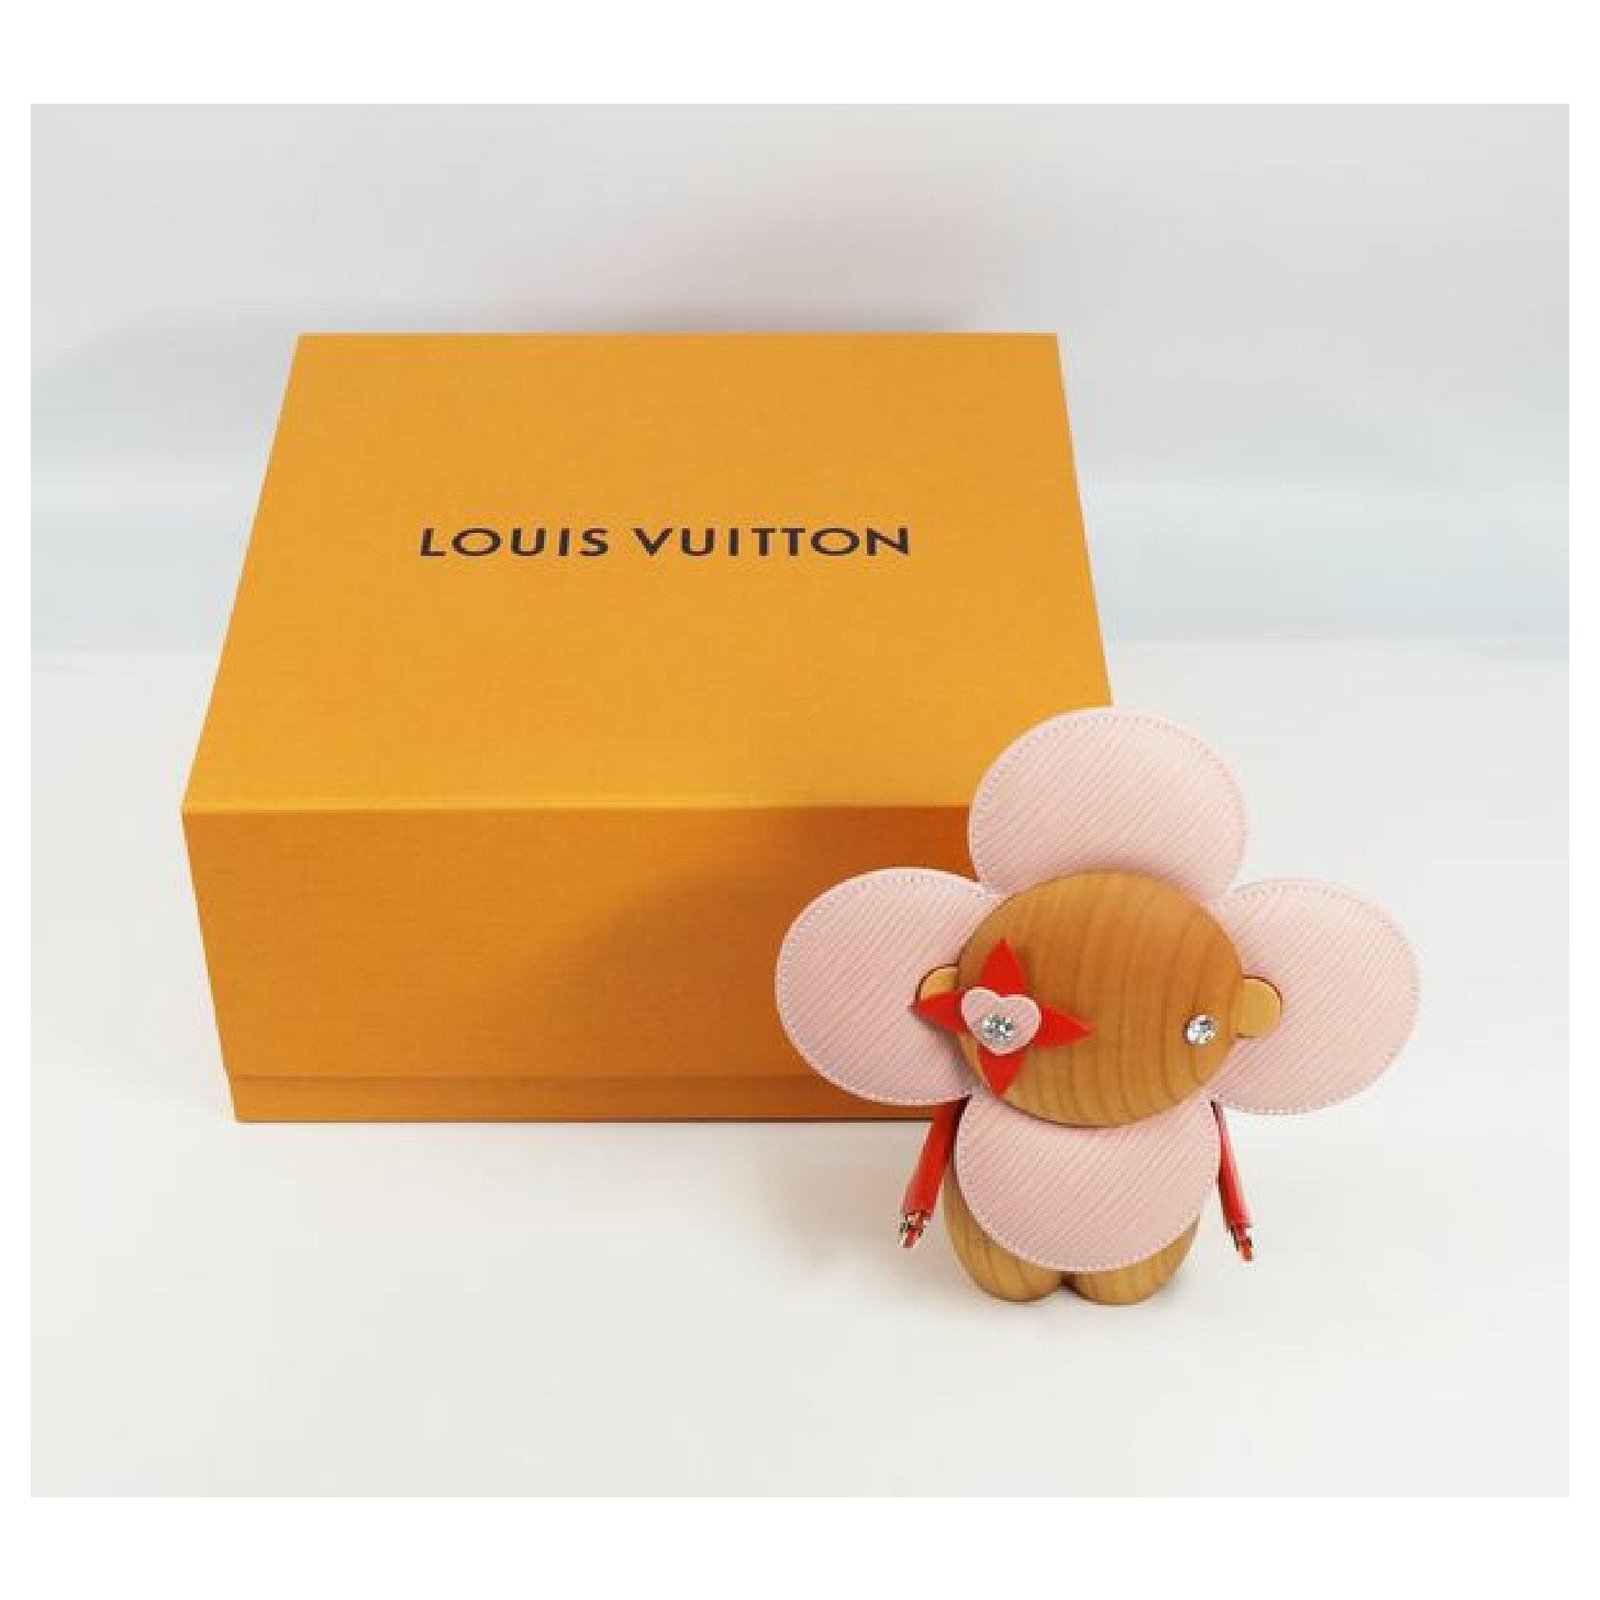 Louis Vuitton Crafty Vivienne Wood Figure GI0515 Red/Black/White - FW21 - US